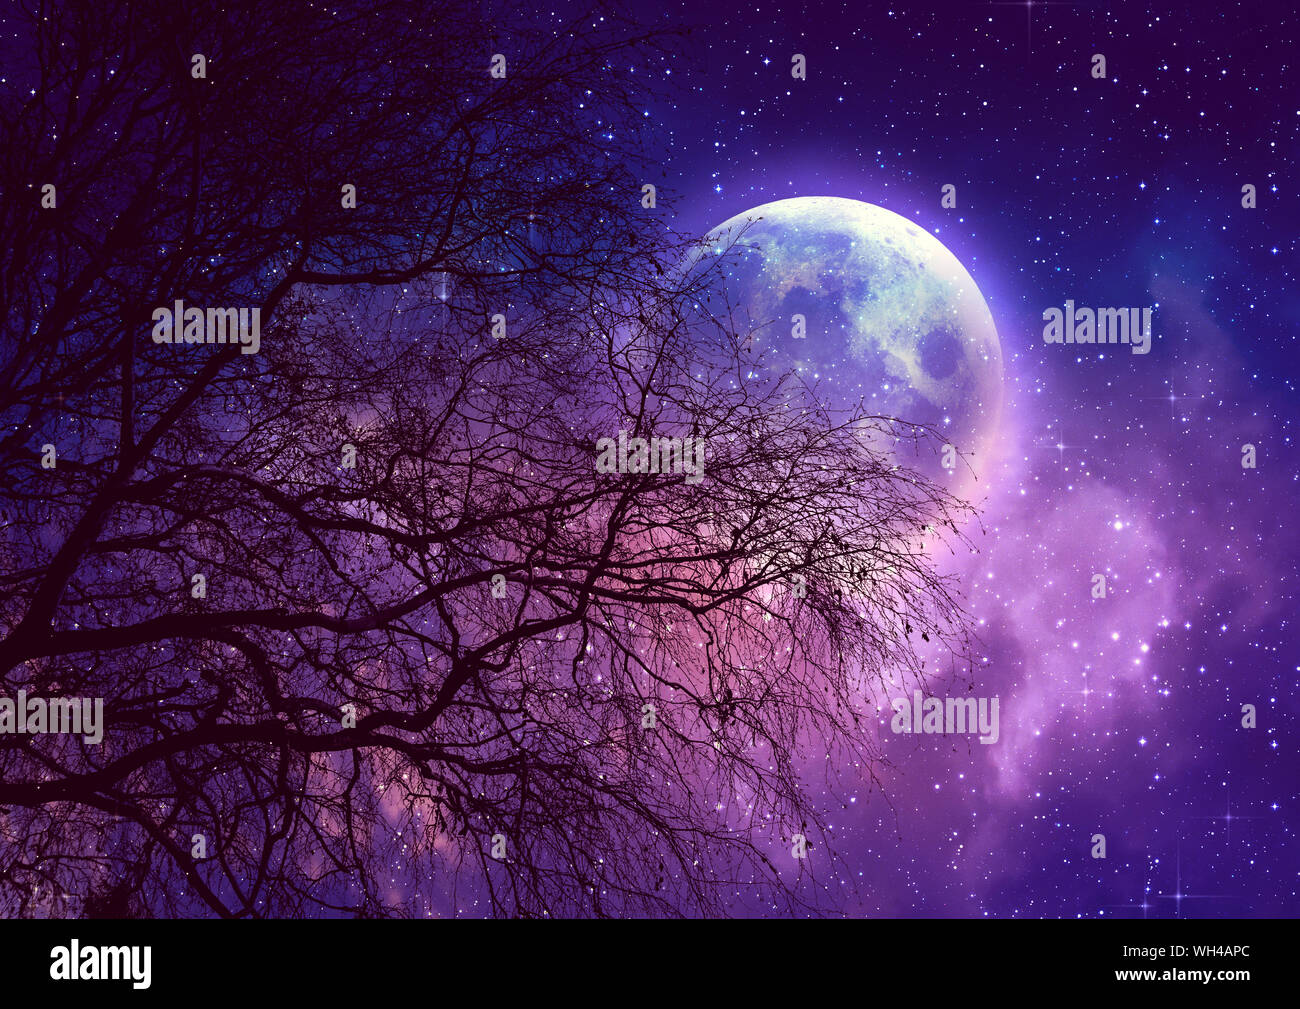 black and purple moon wallpaper